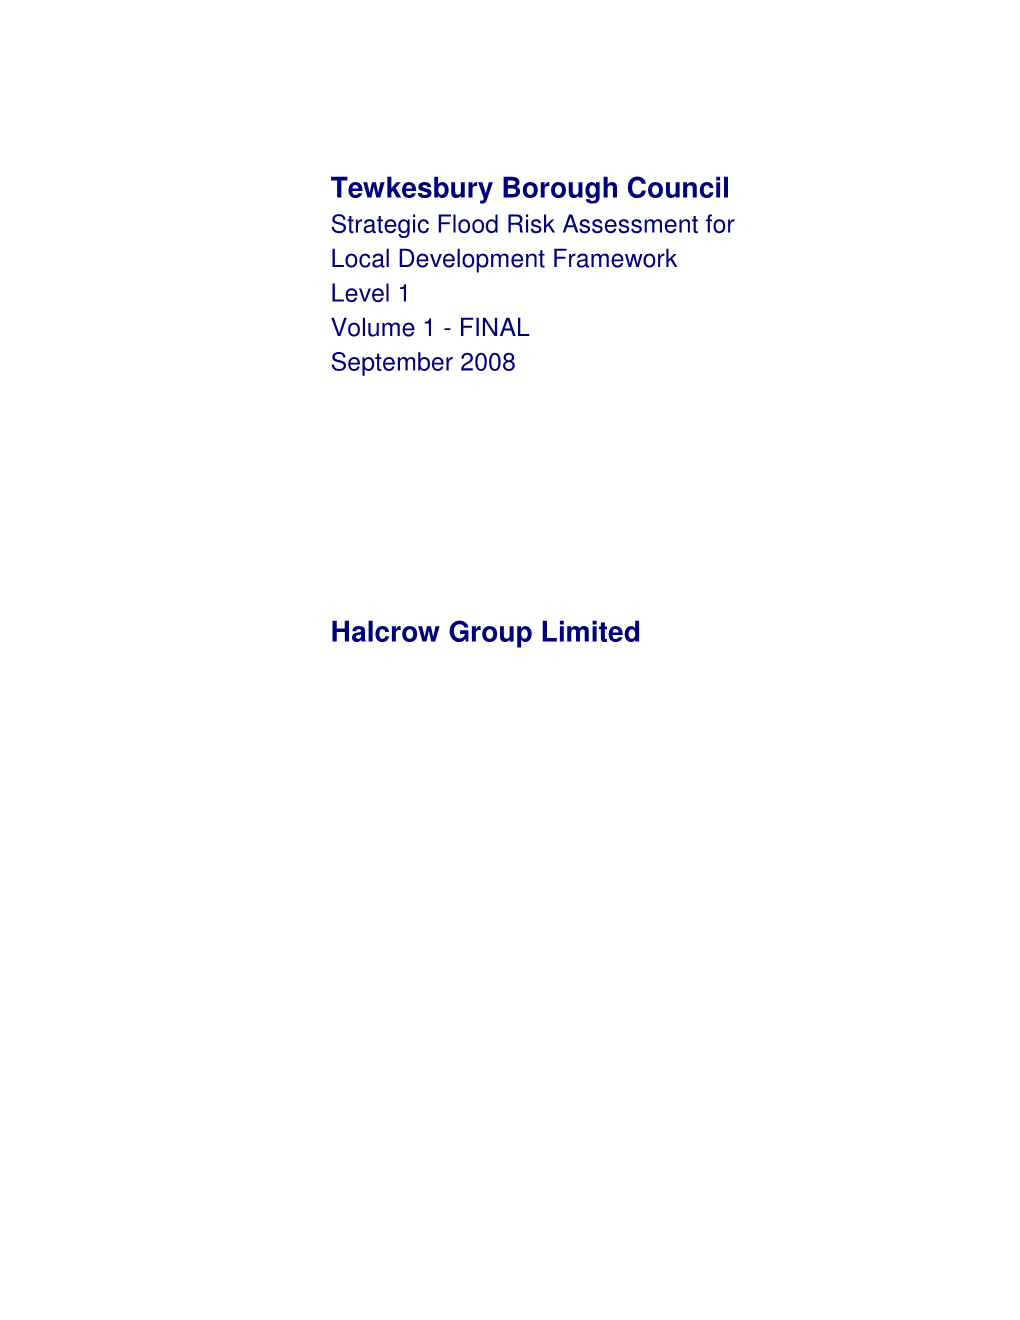 Tewkesbury Borough Council Level 1 SFRA FINAL